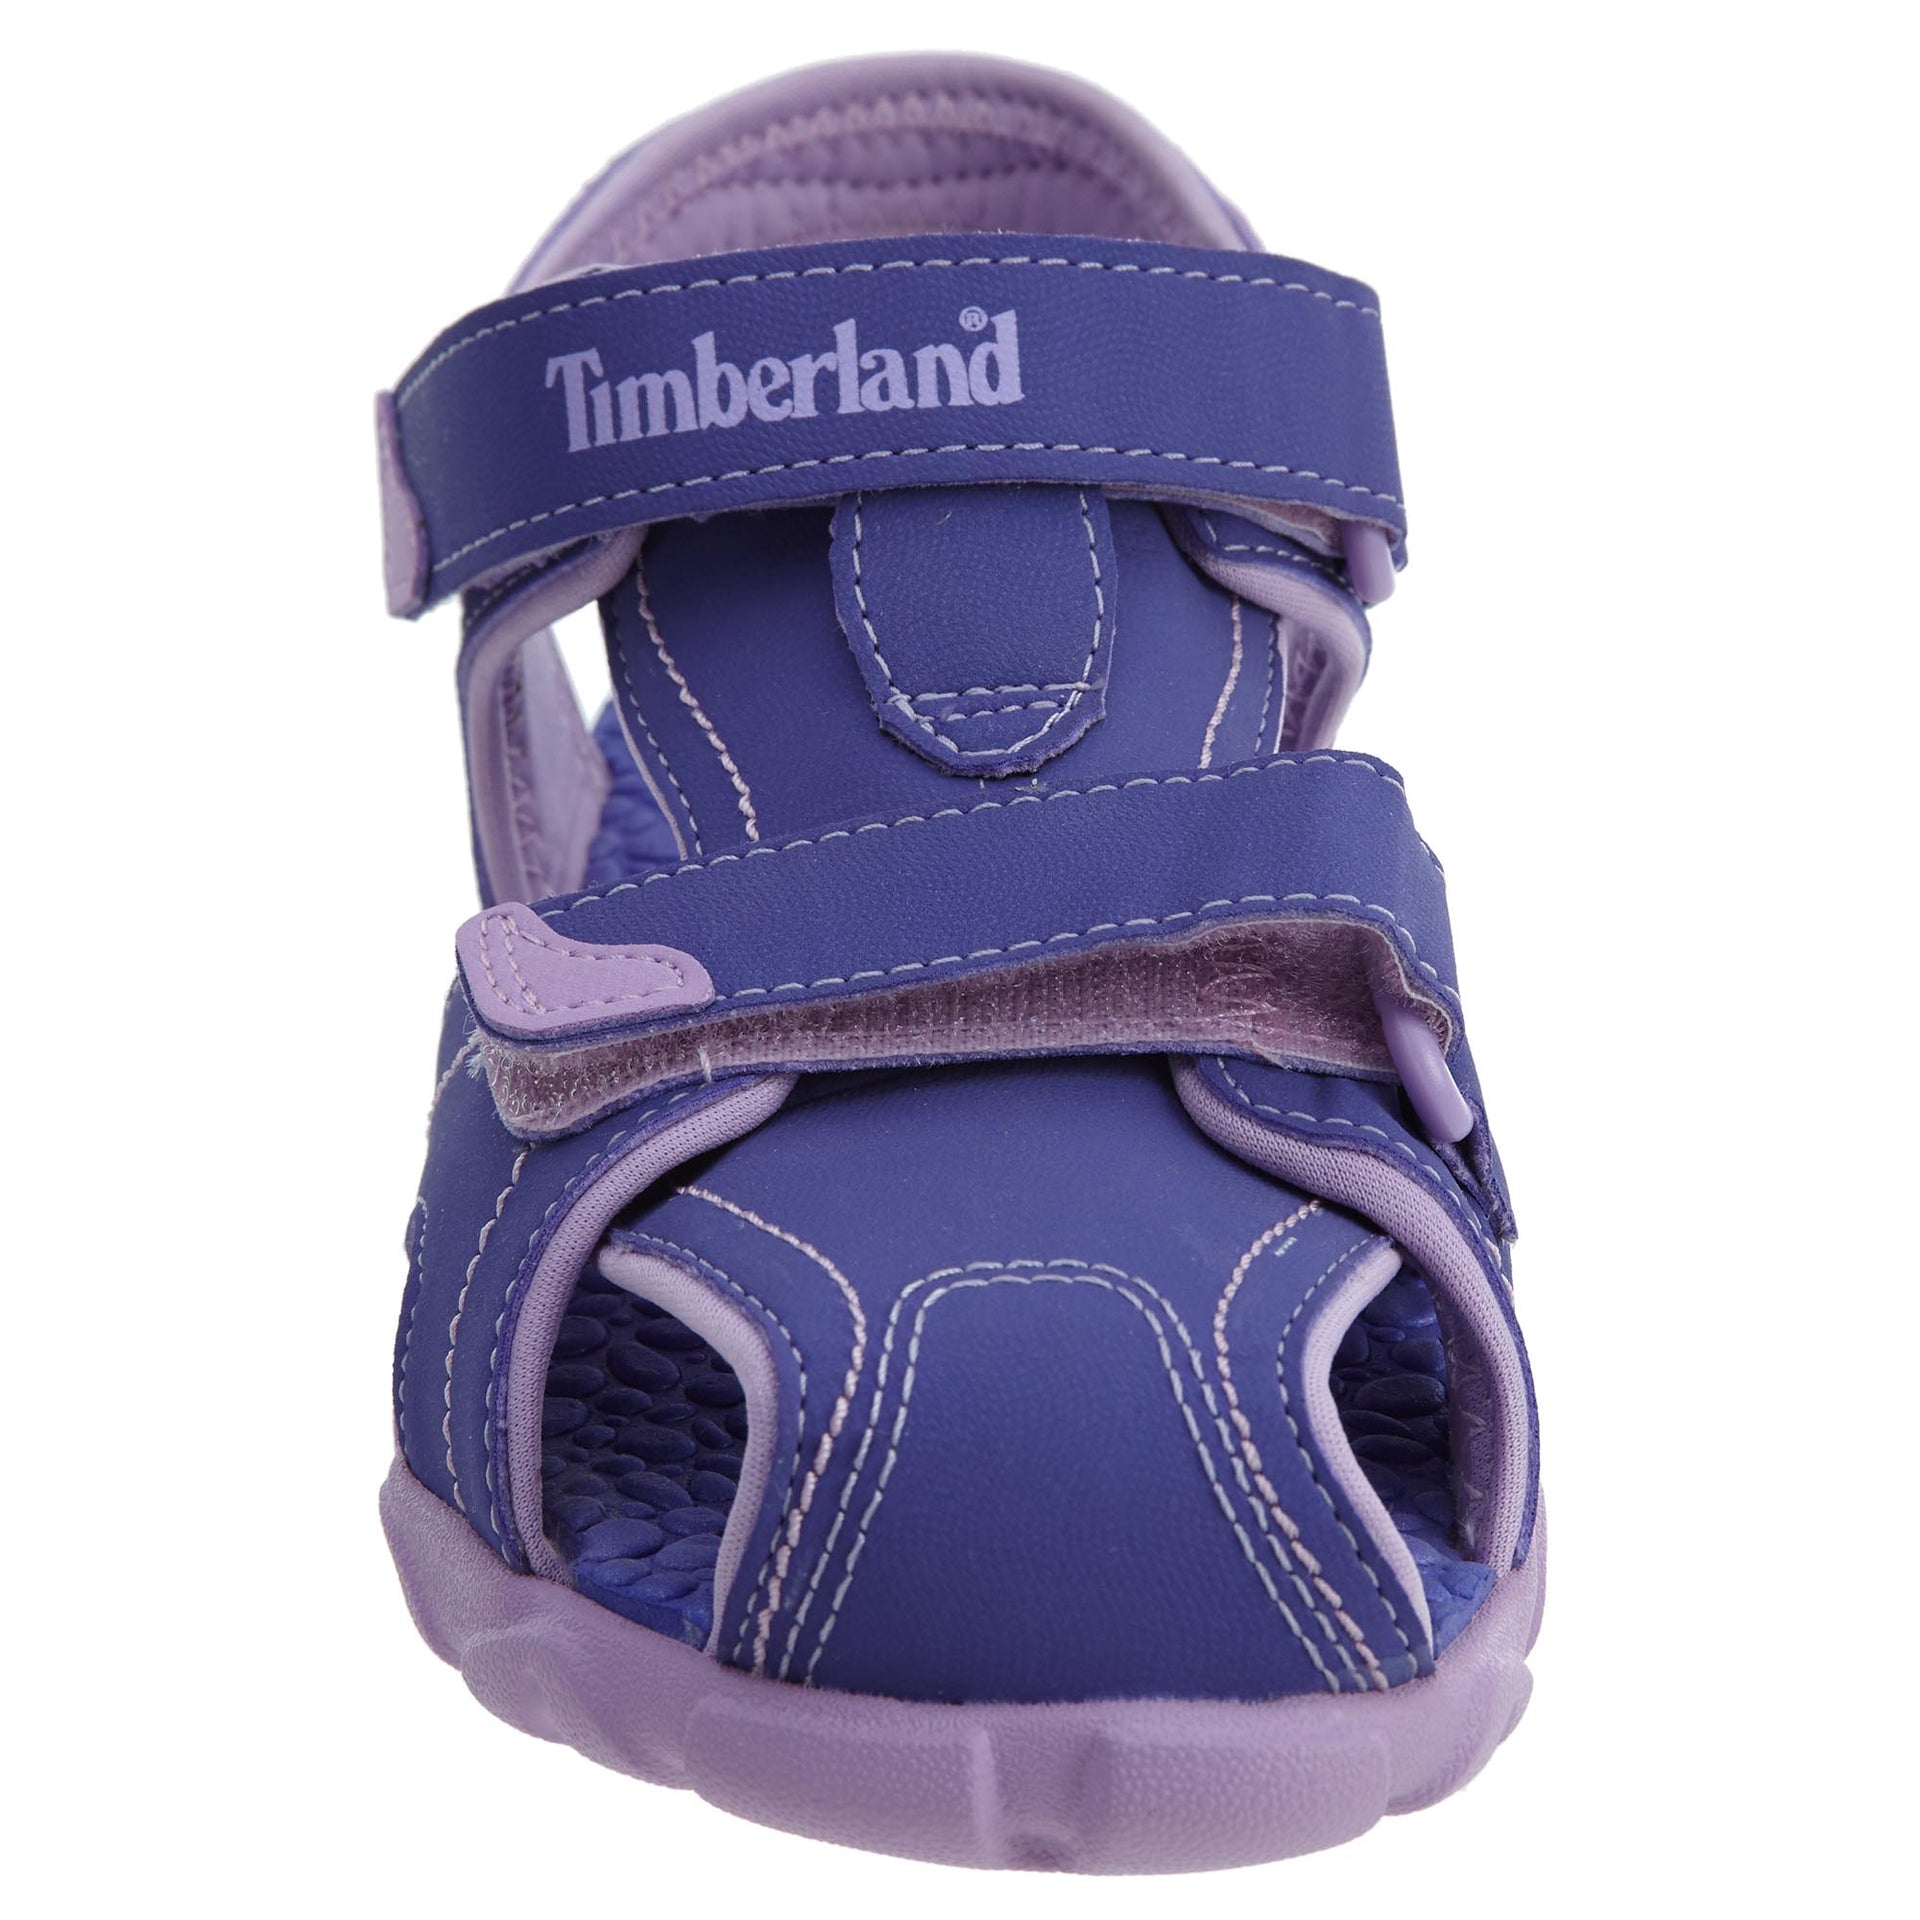 Timberland Splash Town Closed Toe Sandal Sandal Big Kids Style : 7892r